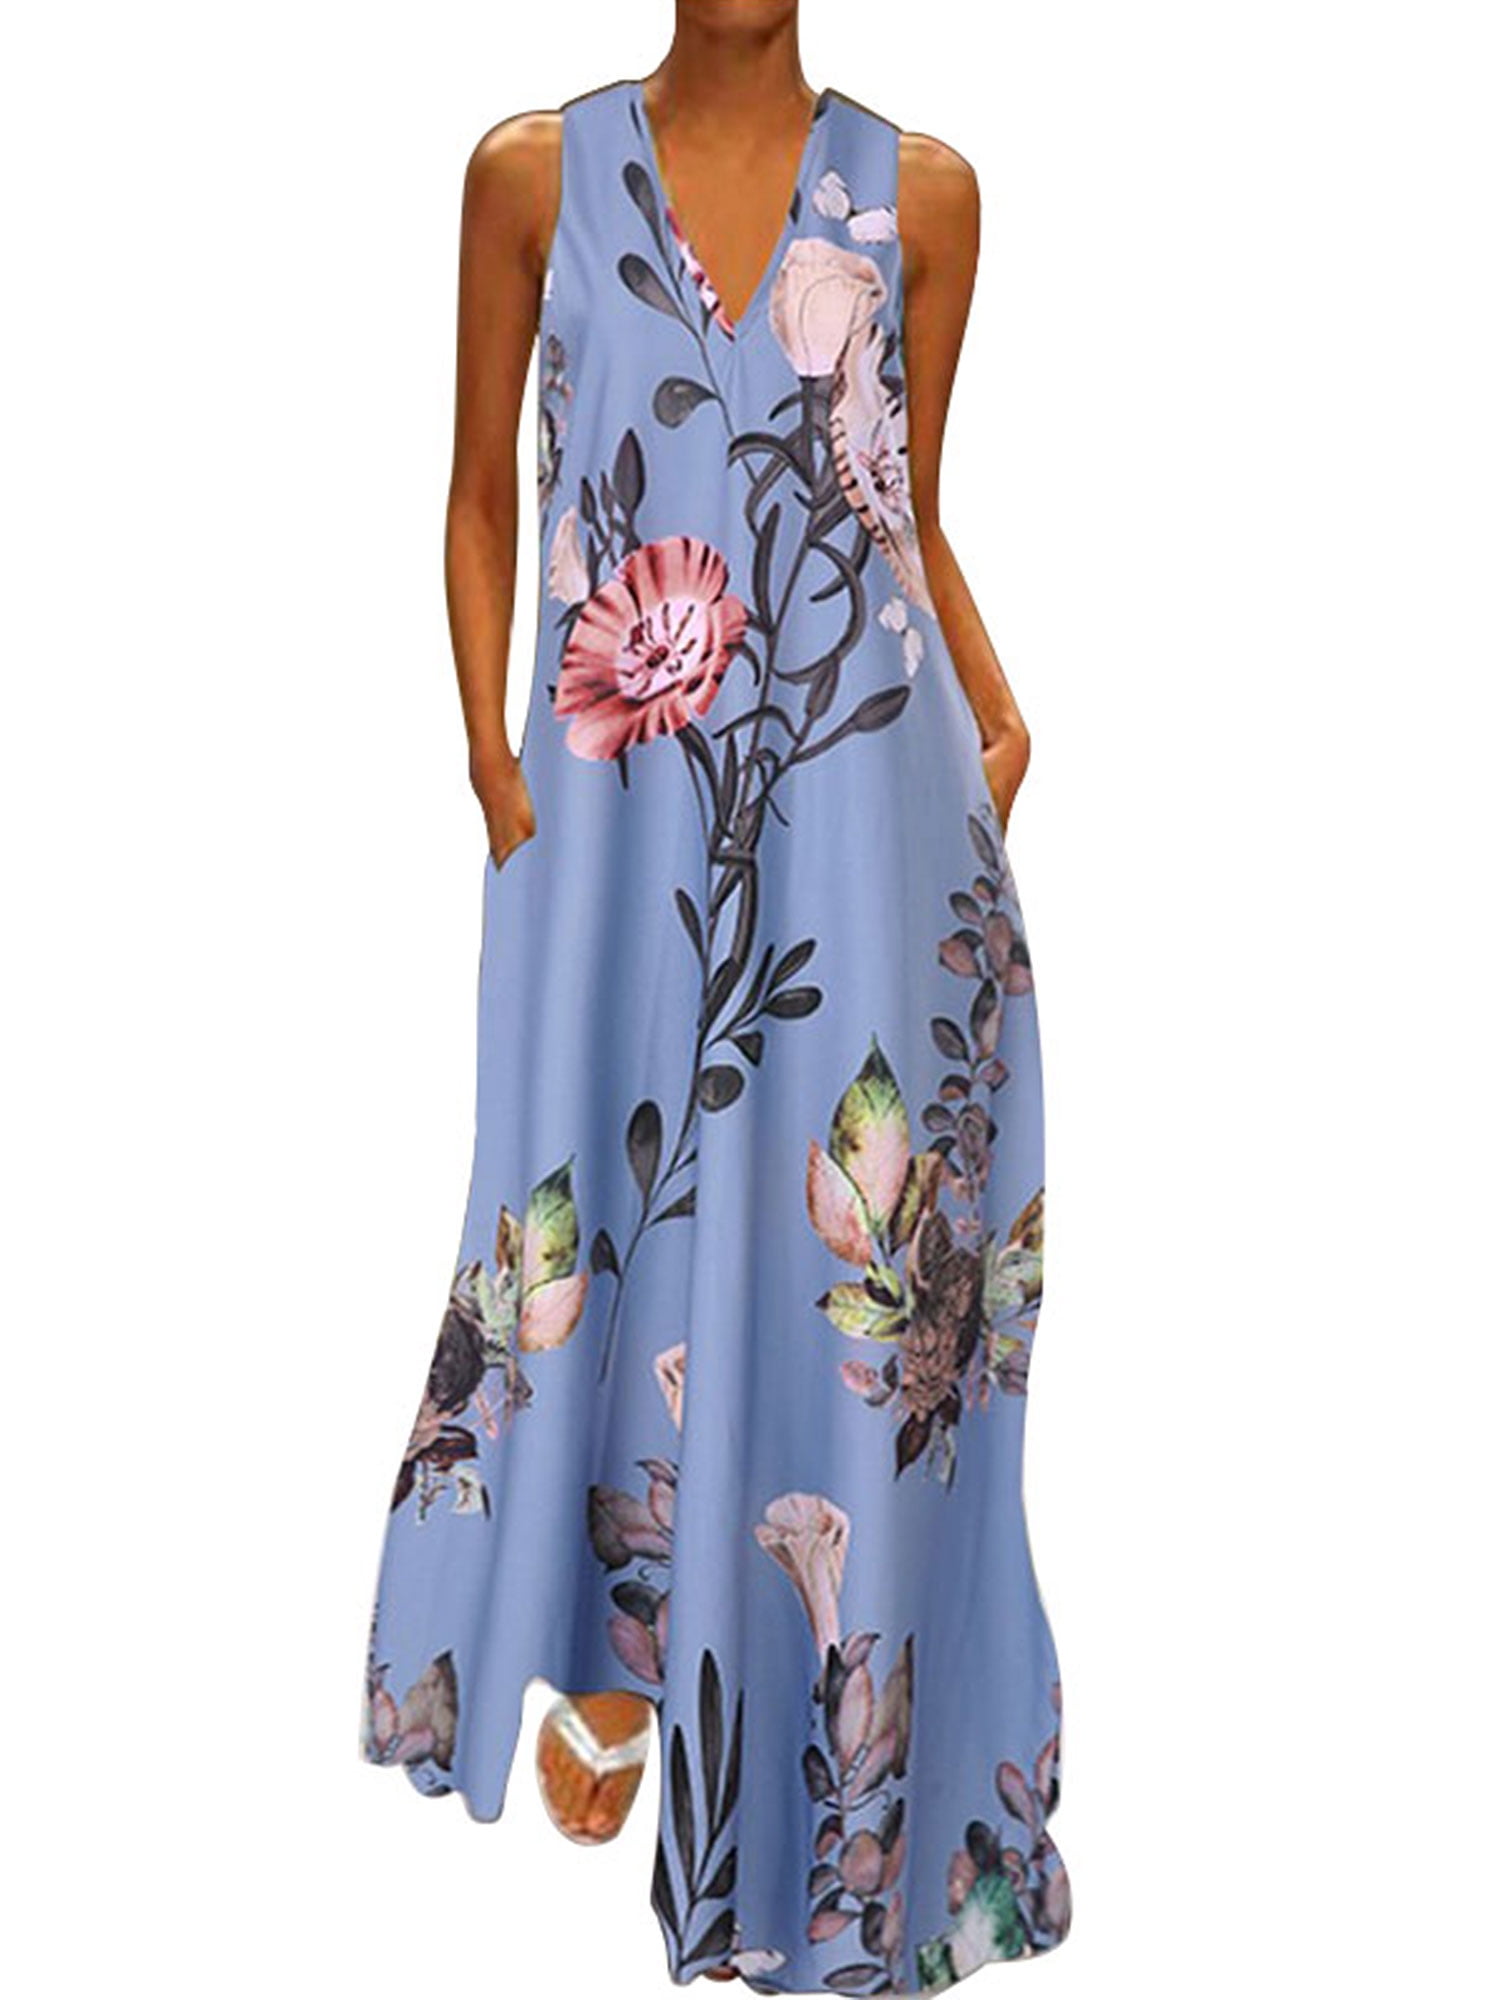 AIHOU Women Plus Size Floral Boho Vintage Button Down Sleeveless Long Maxi Dress Party Beach Casual Summer Sundress Dress